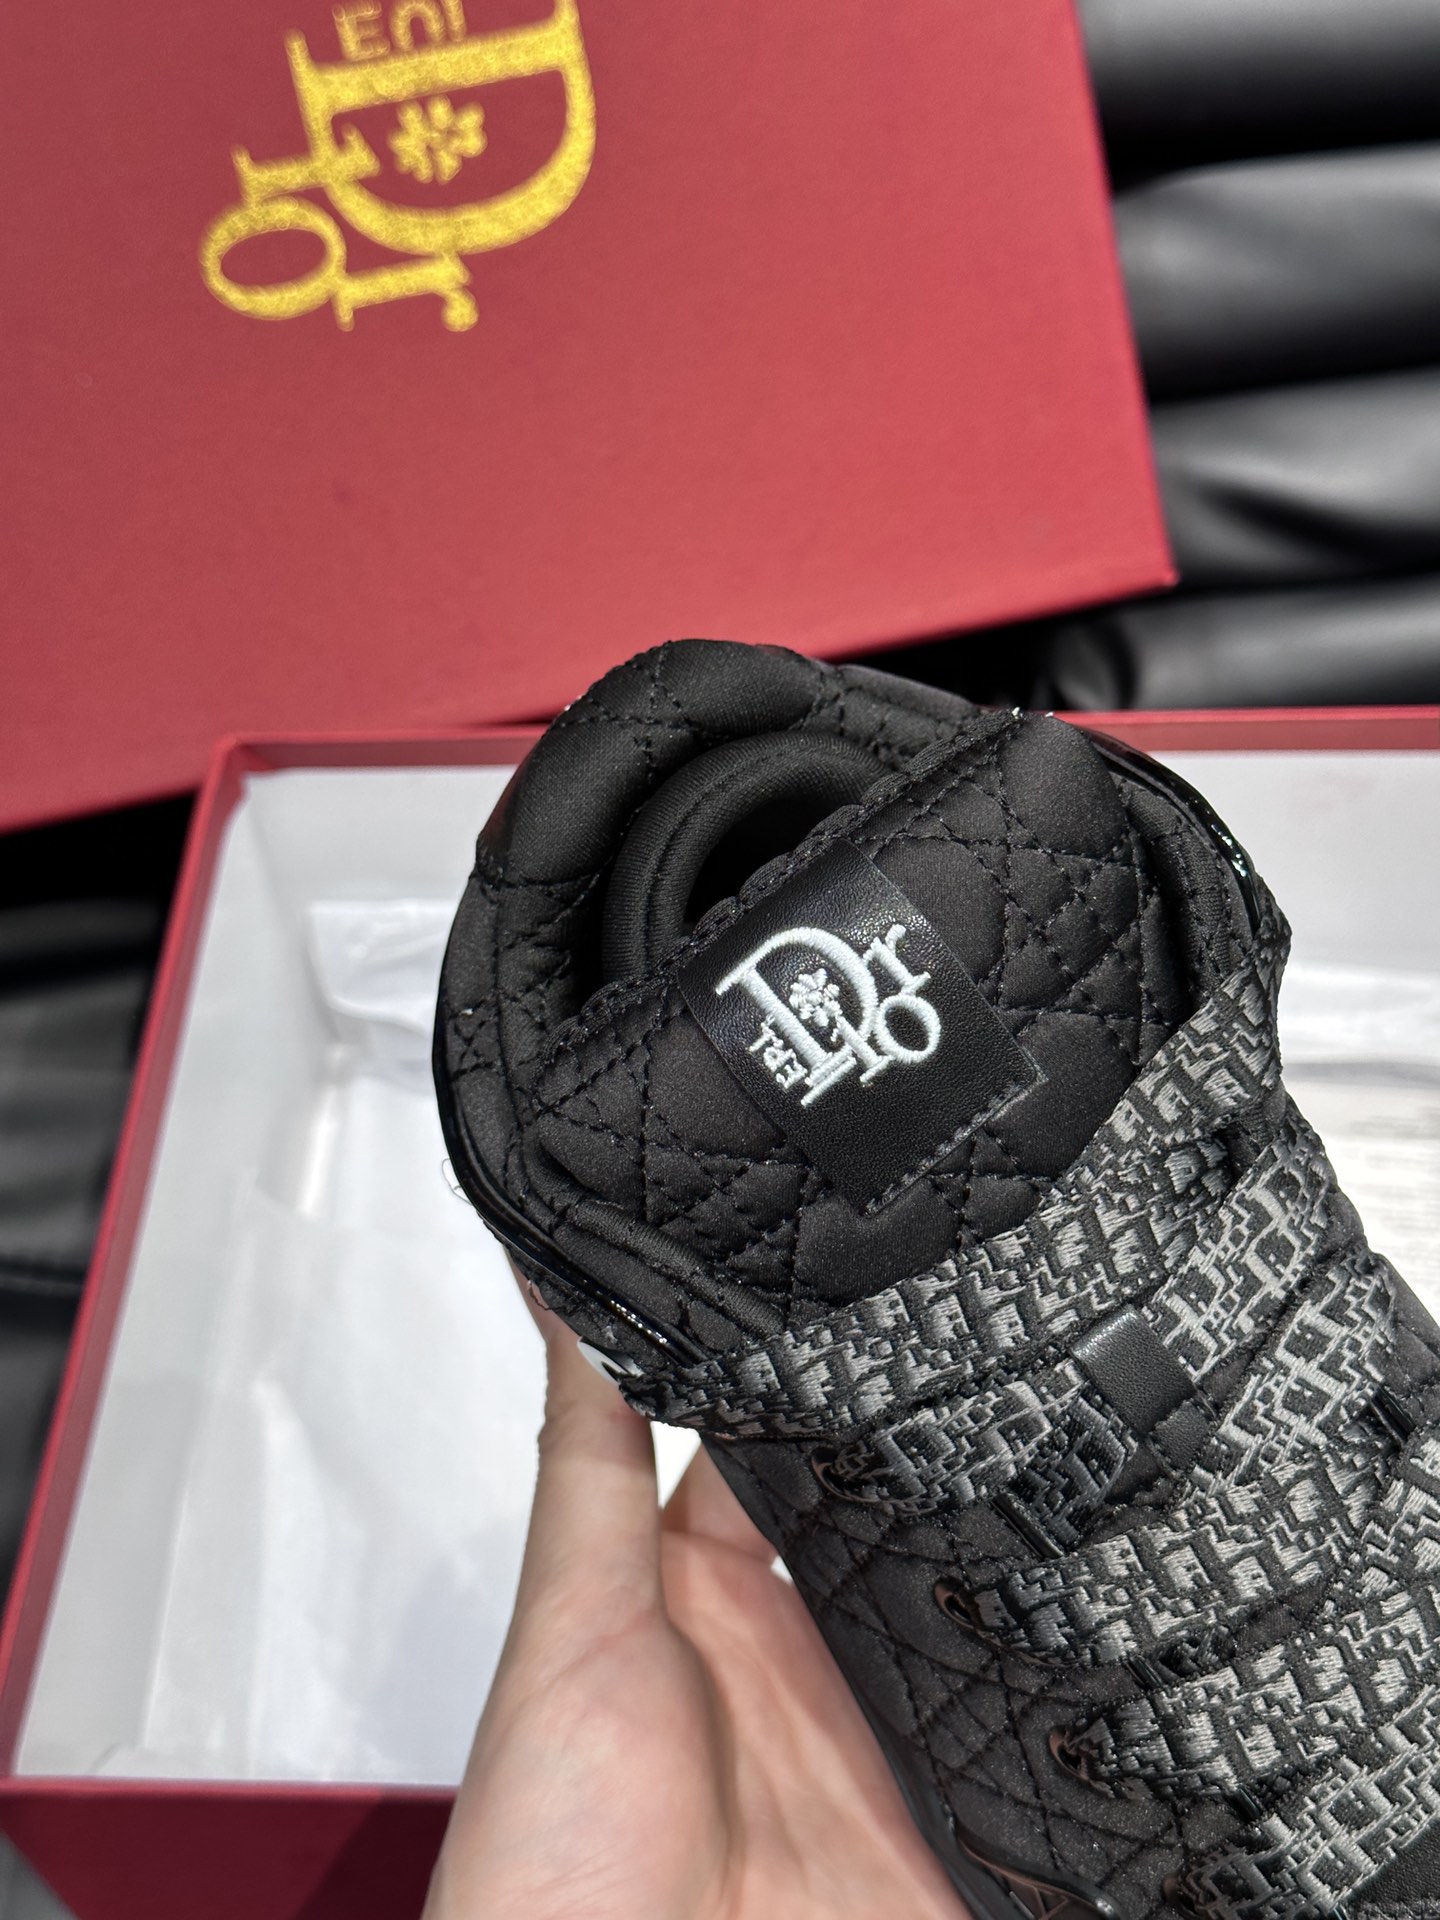 ️️DiorxERL新款春季限定联名款情侣休闲鞋大舌头滑板运动鞋由DiorMan鞋履设计师ThiboDe